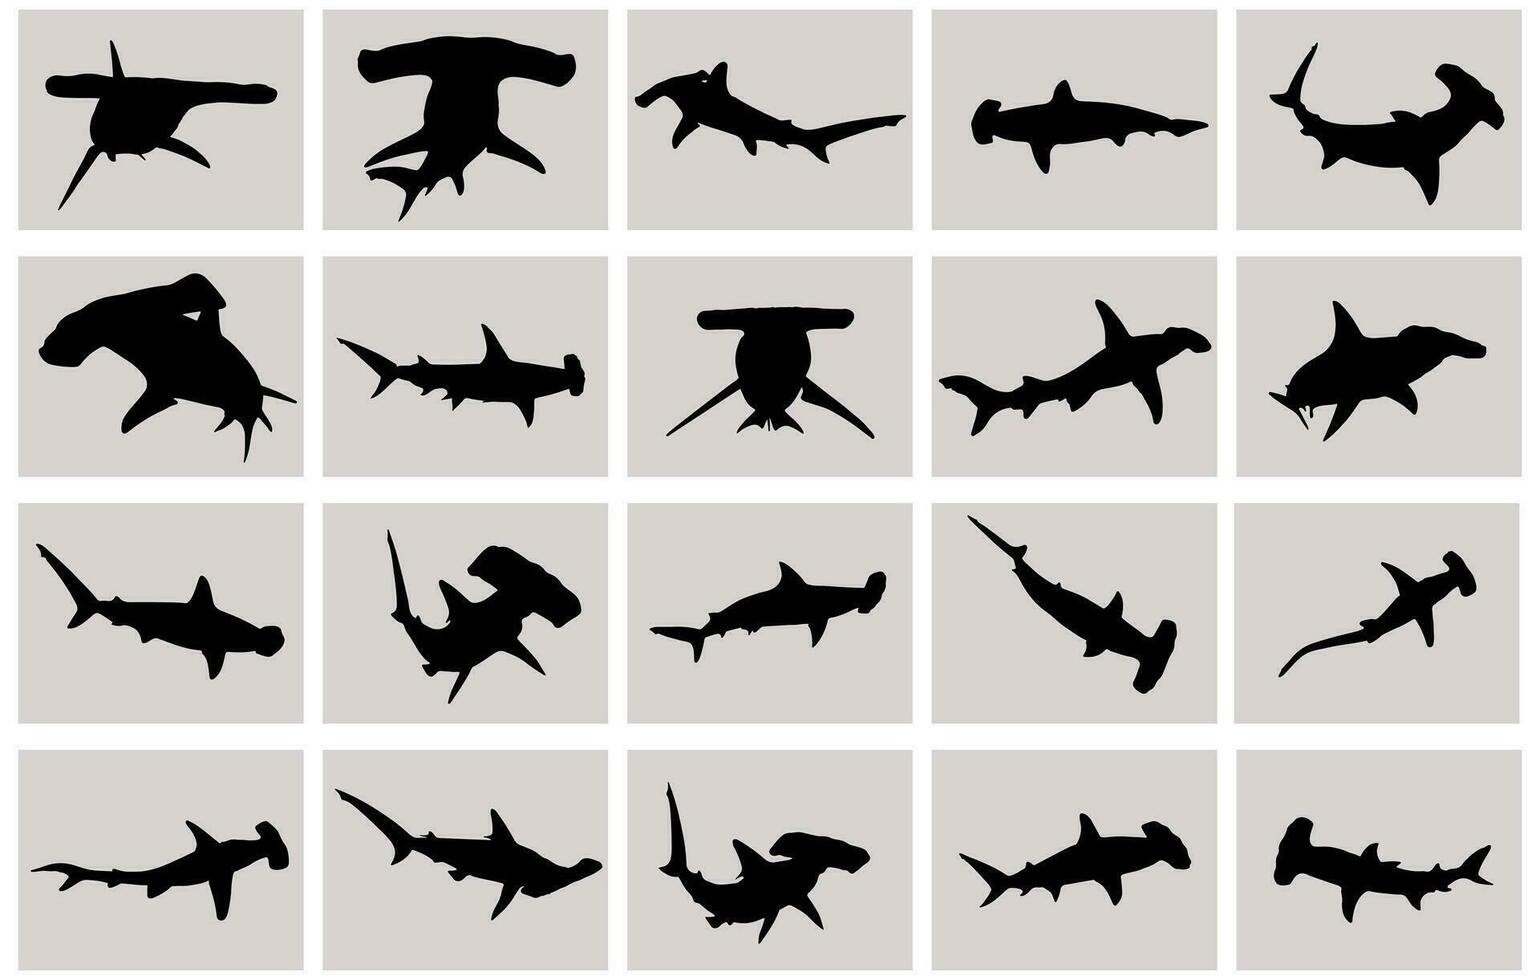 negro silueta conjunto de cabeza de martillo tiburón submarino gigante animal sencillo dibujos animados personaje diseño plano vector